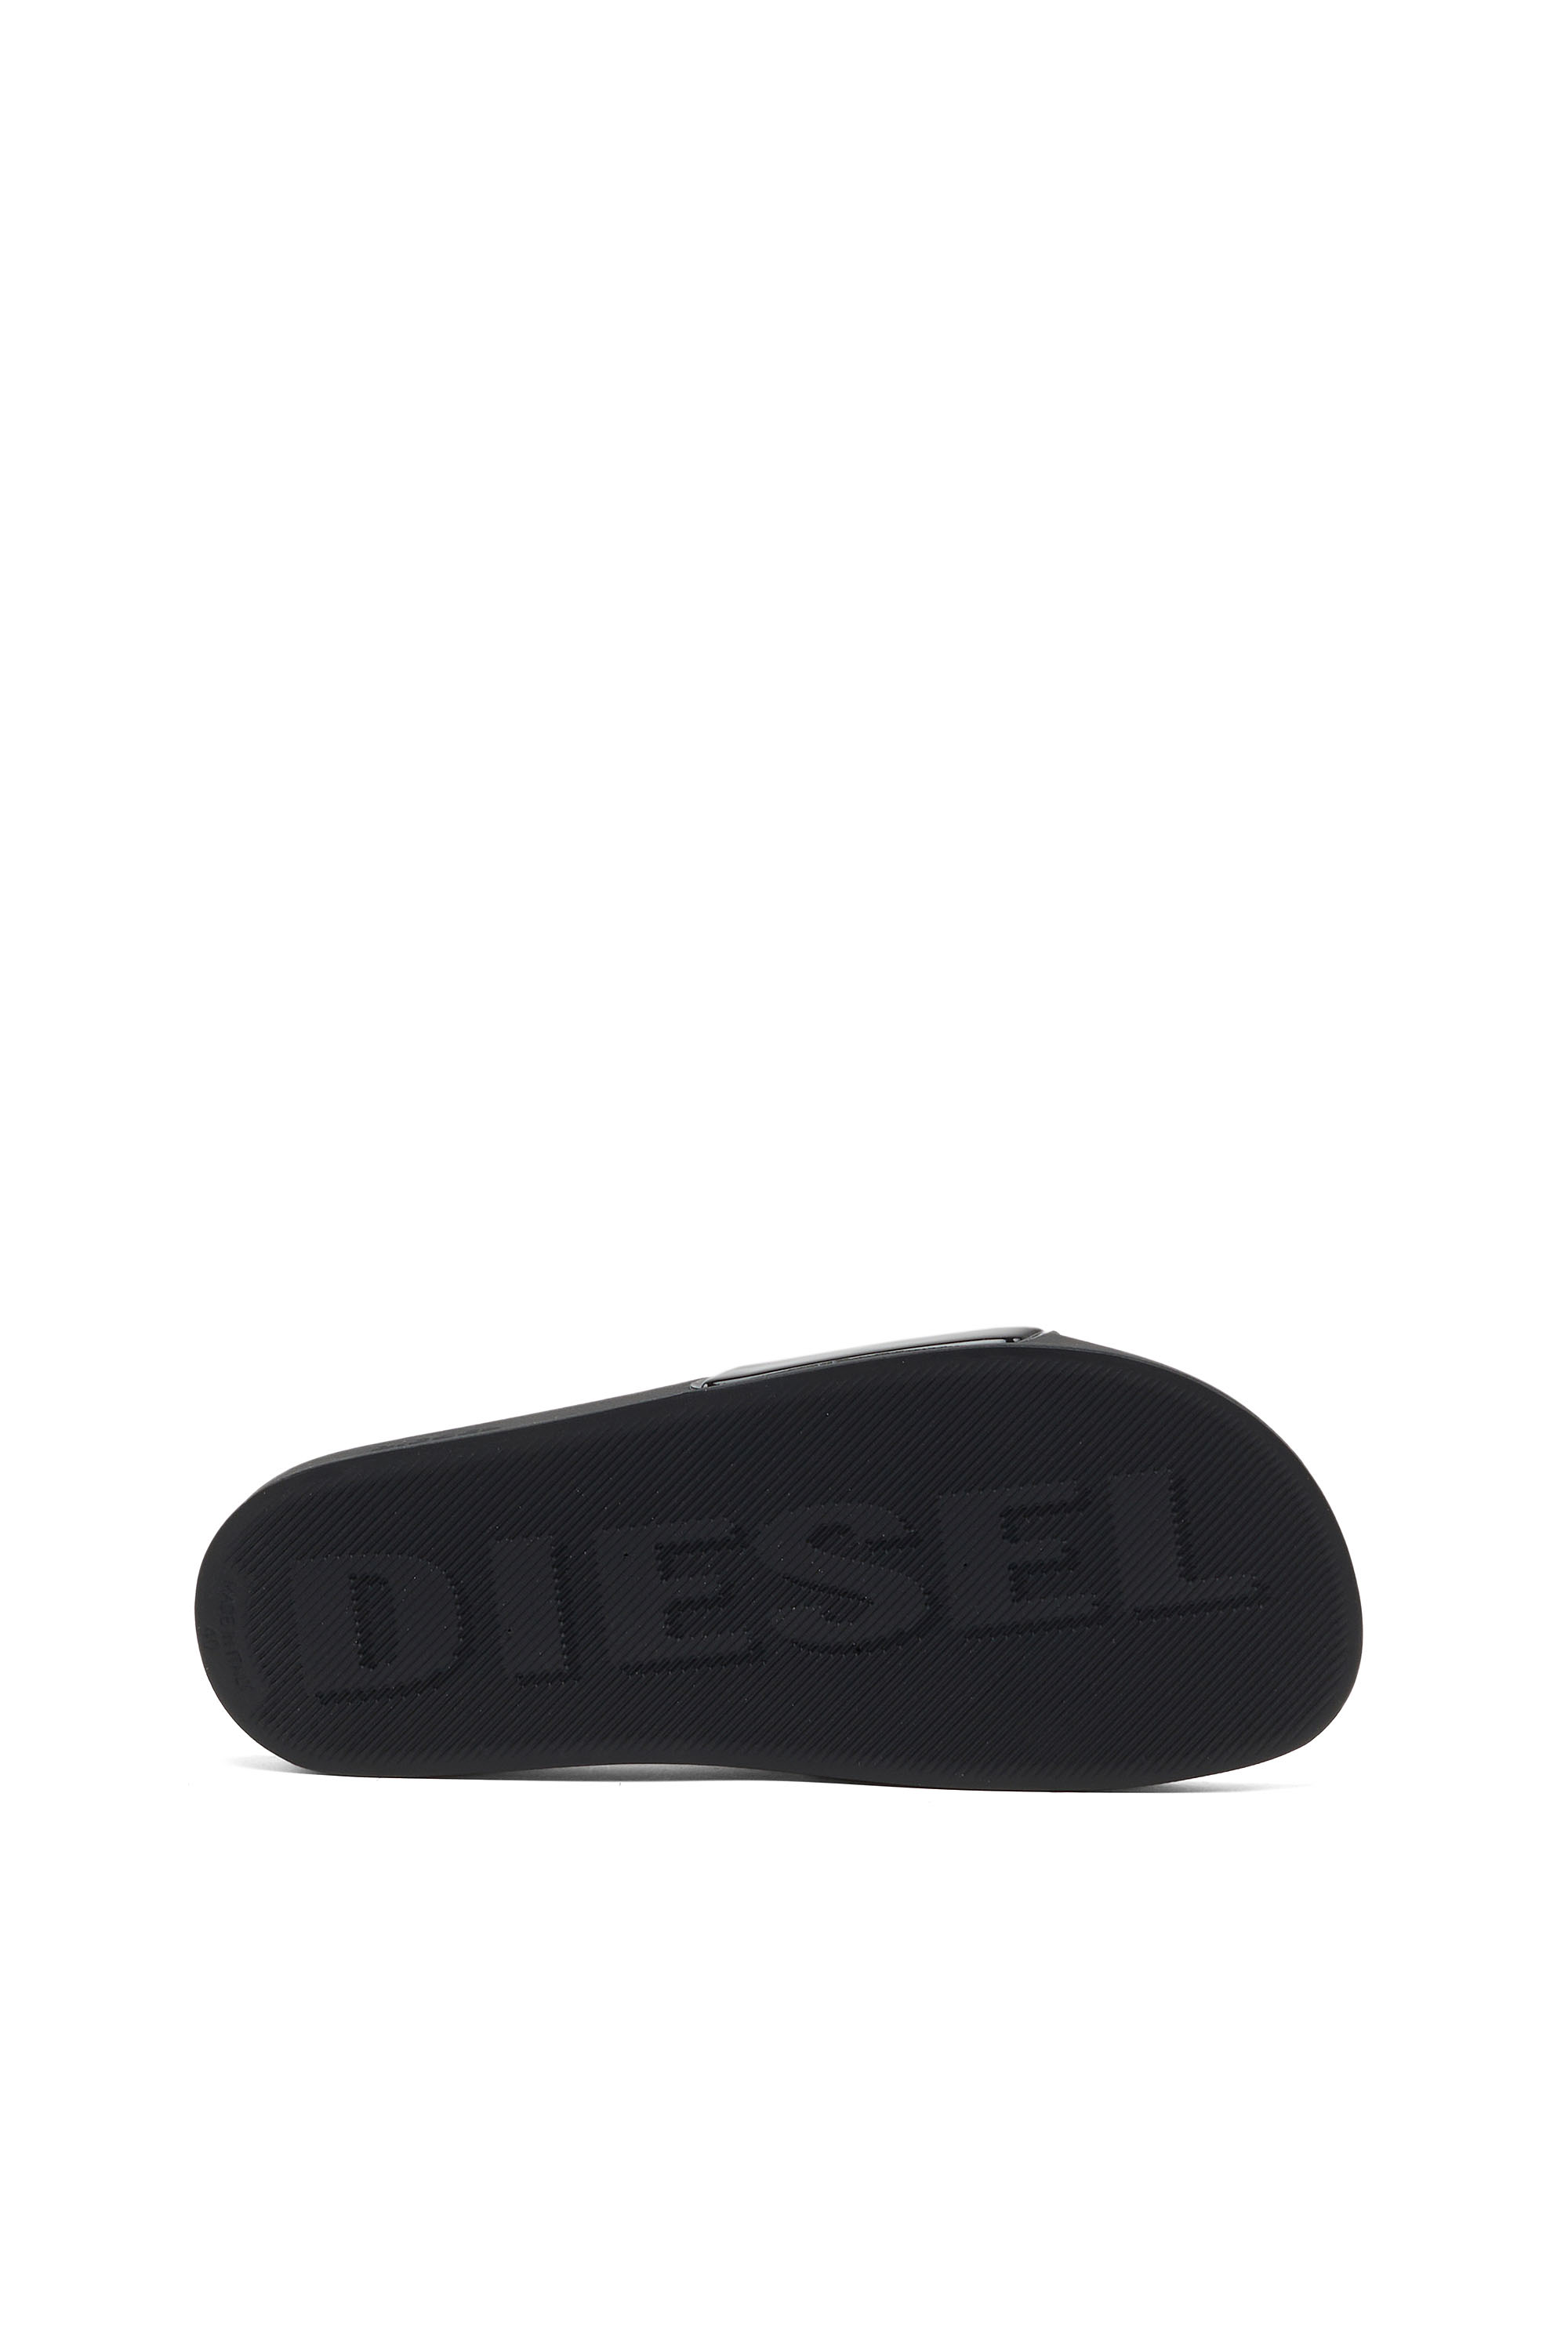 Diesel - SA-MAYEMI D W, Black - Image 4